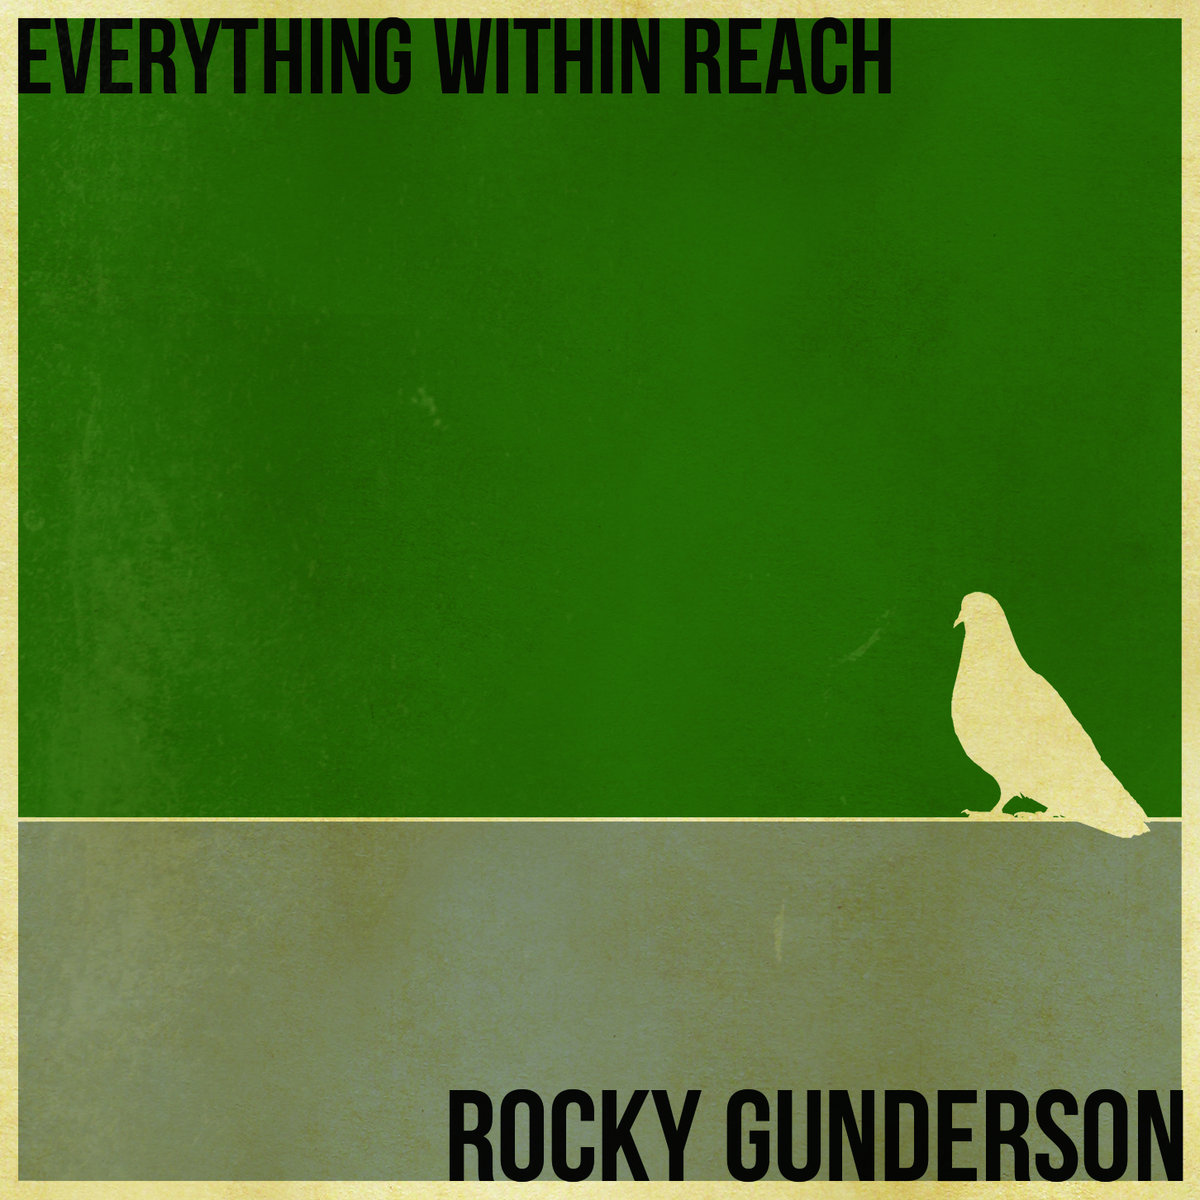 rocky gunderon - everything within reach.jpg